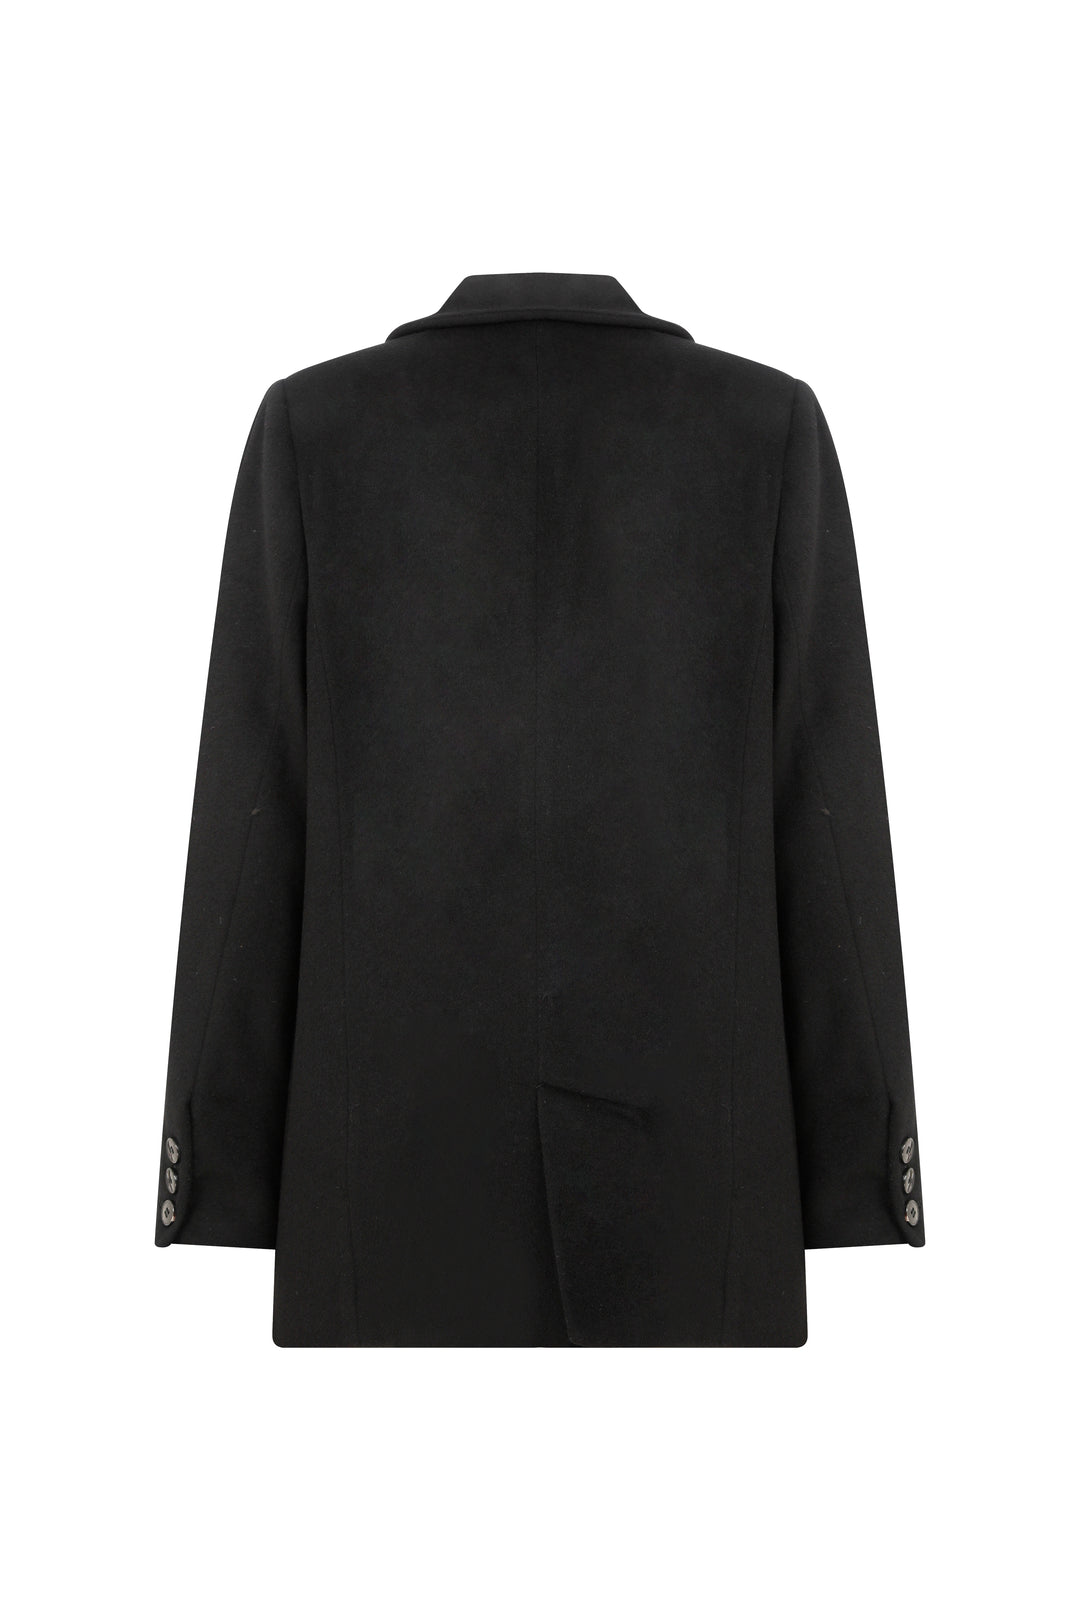 Charlie - Siyah Oversize Yün Blazer Ceket